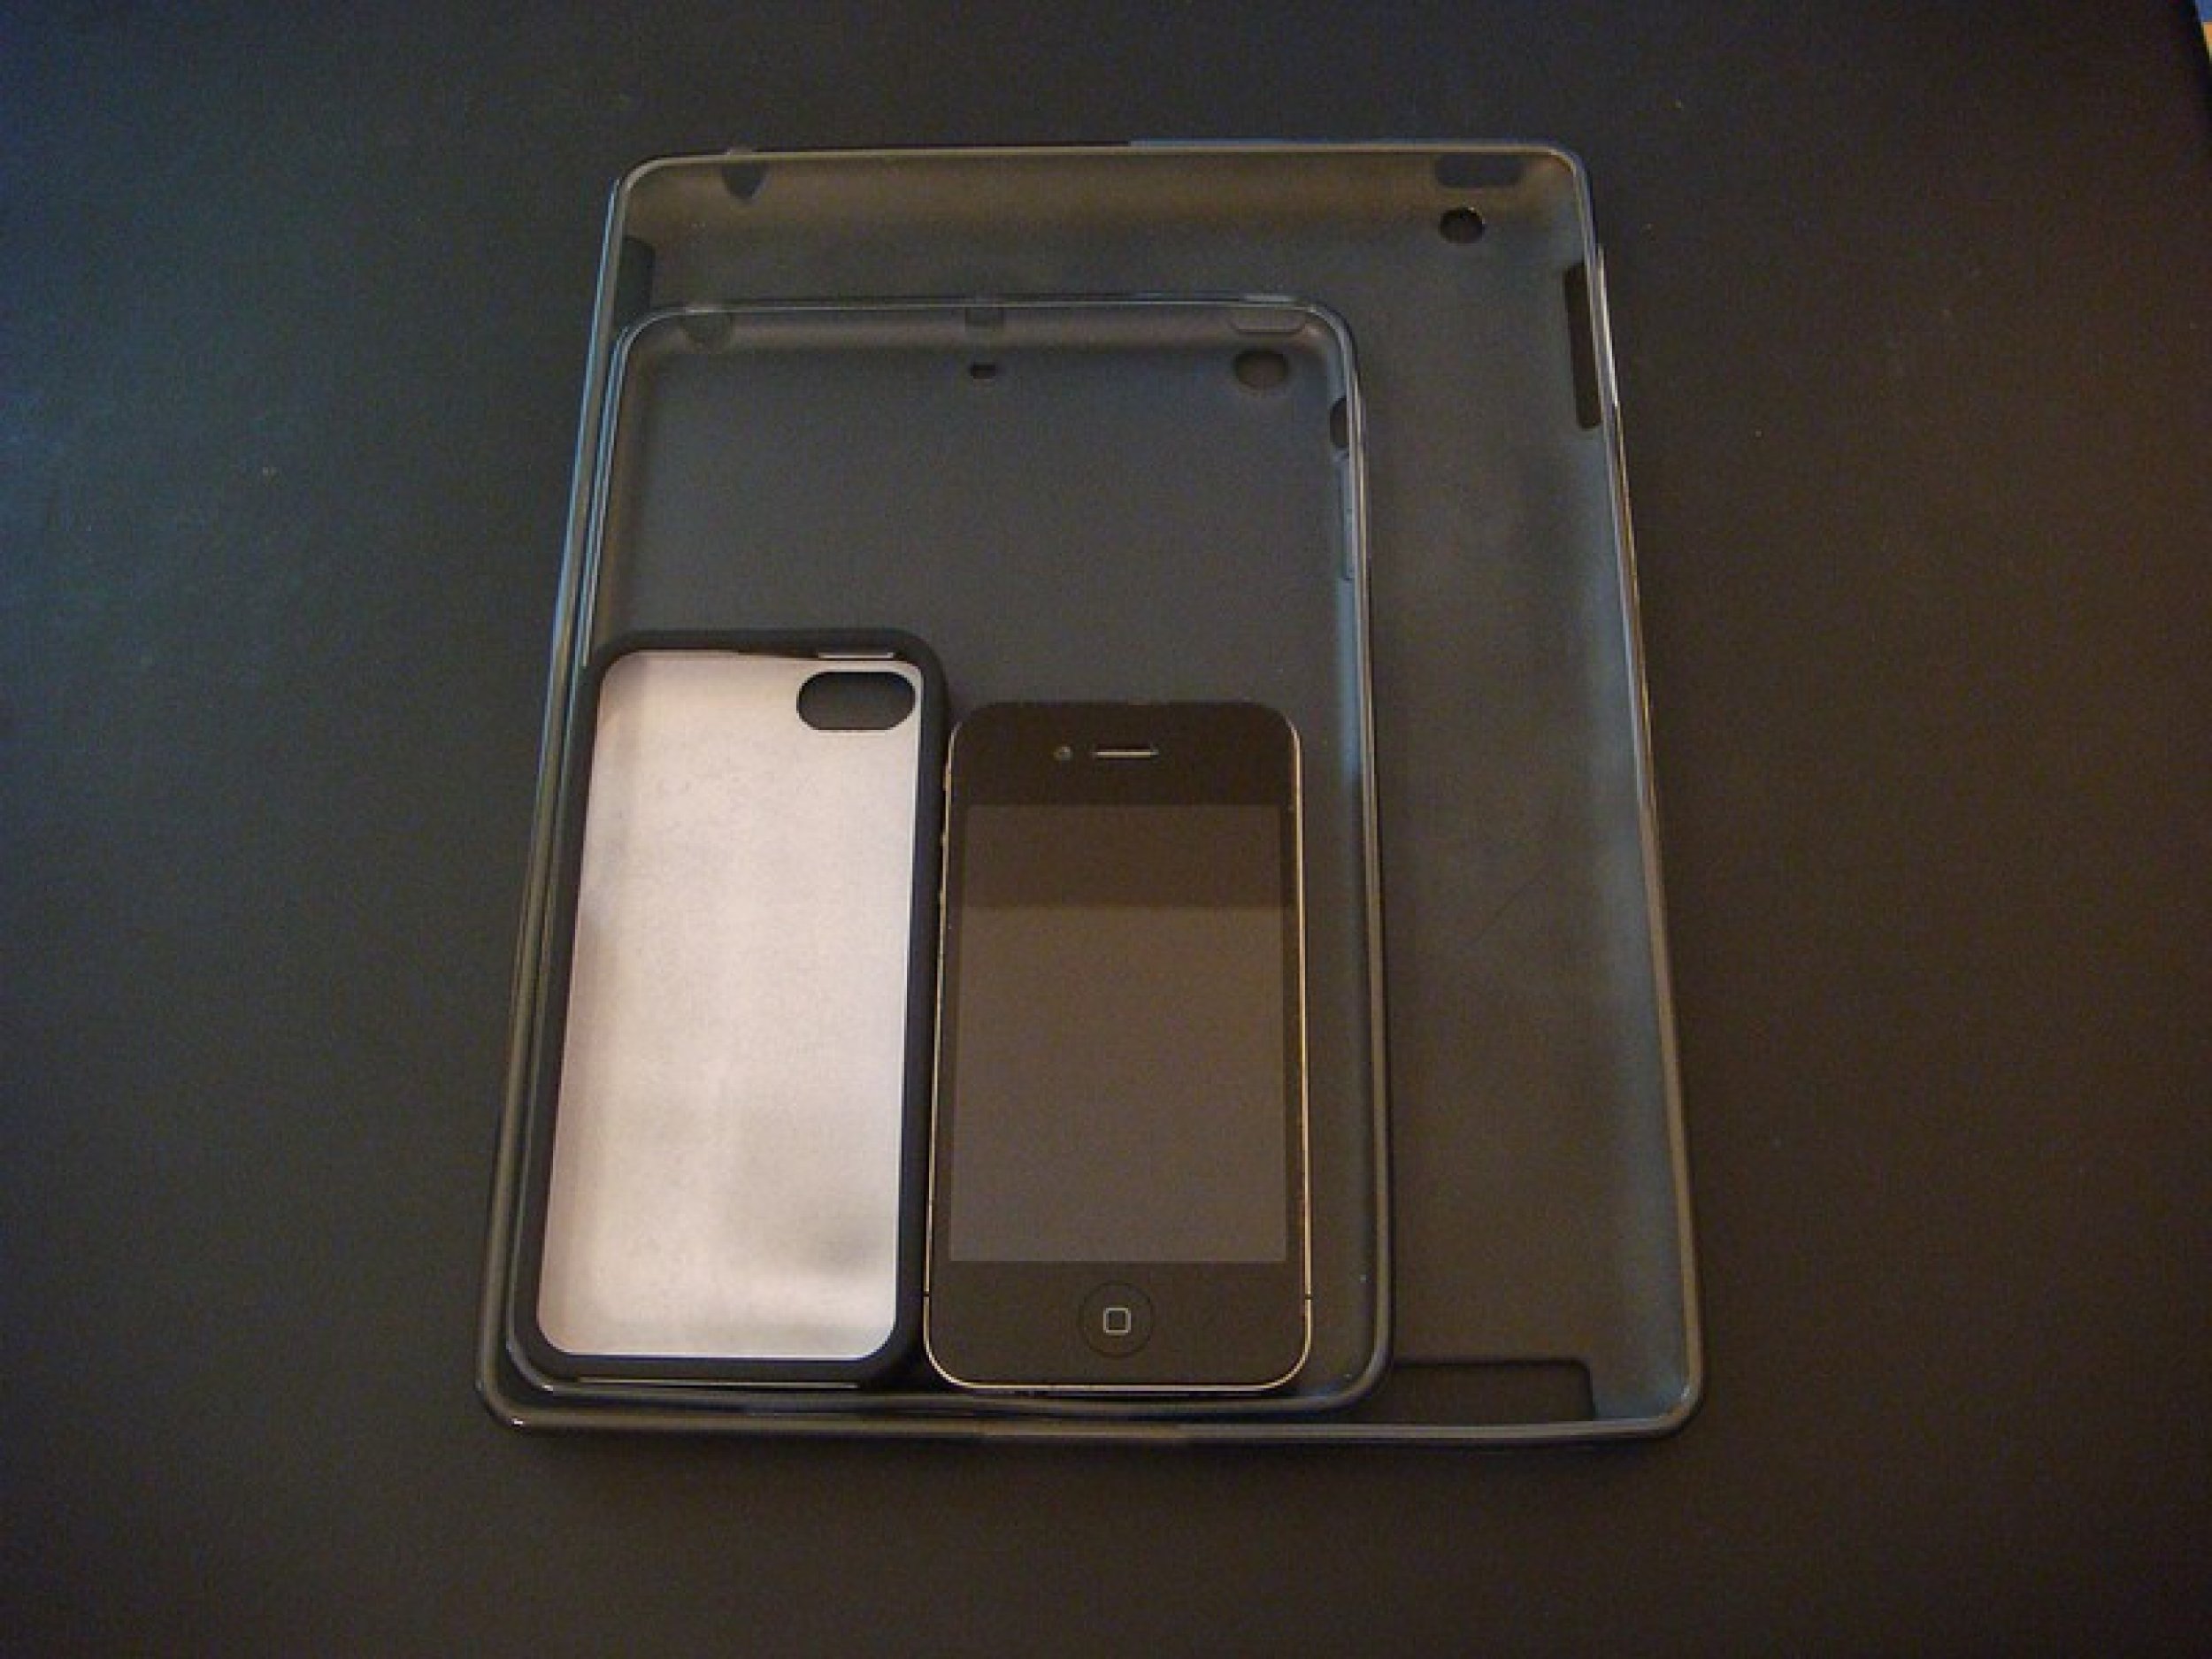 Apple iPhone 5, iPad Mini Rumors Alleged Cases Compared To iPhone 4S, New iPad PHOTOS